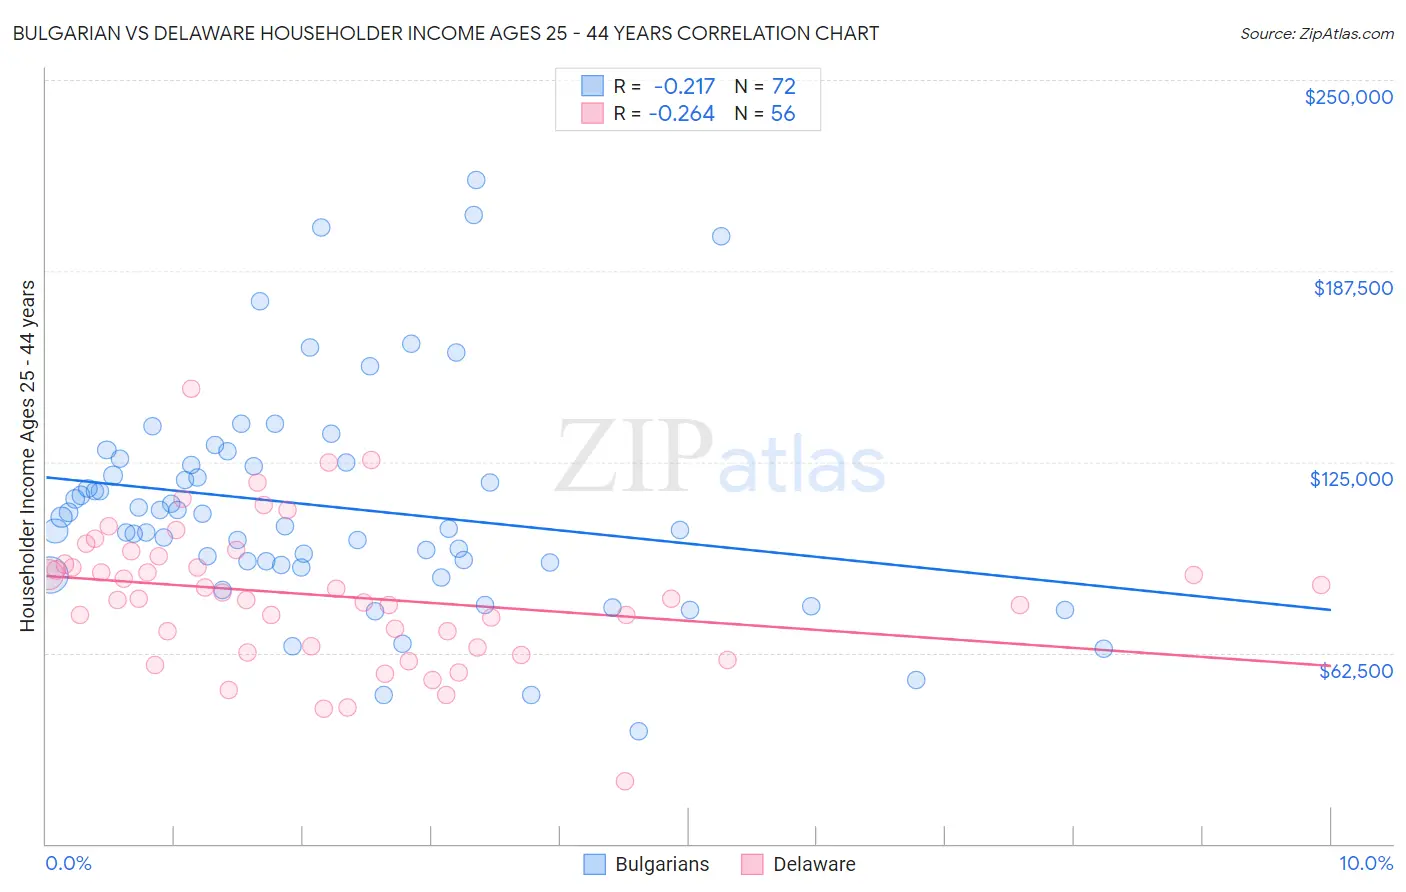 Bulgarian vs Delaware Householder Income Ages 25 - 44 years